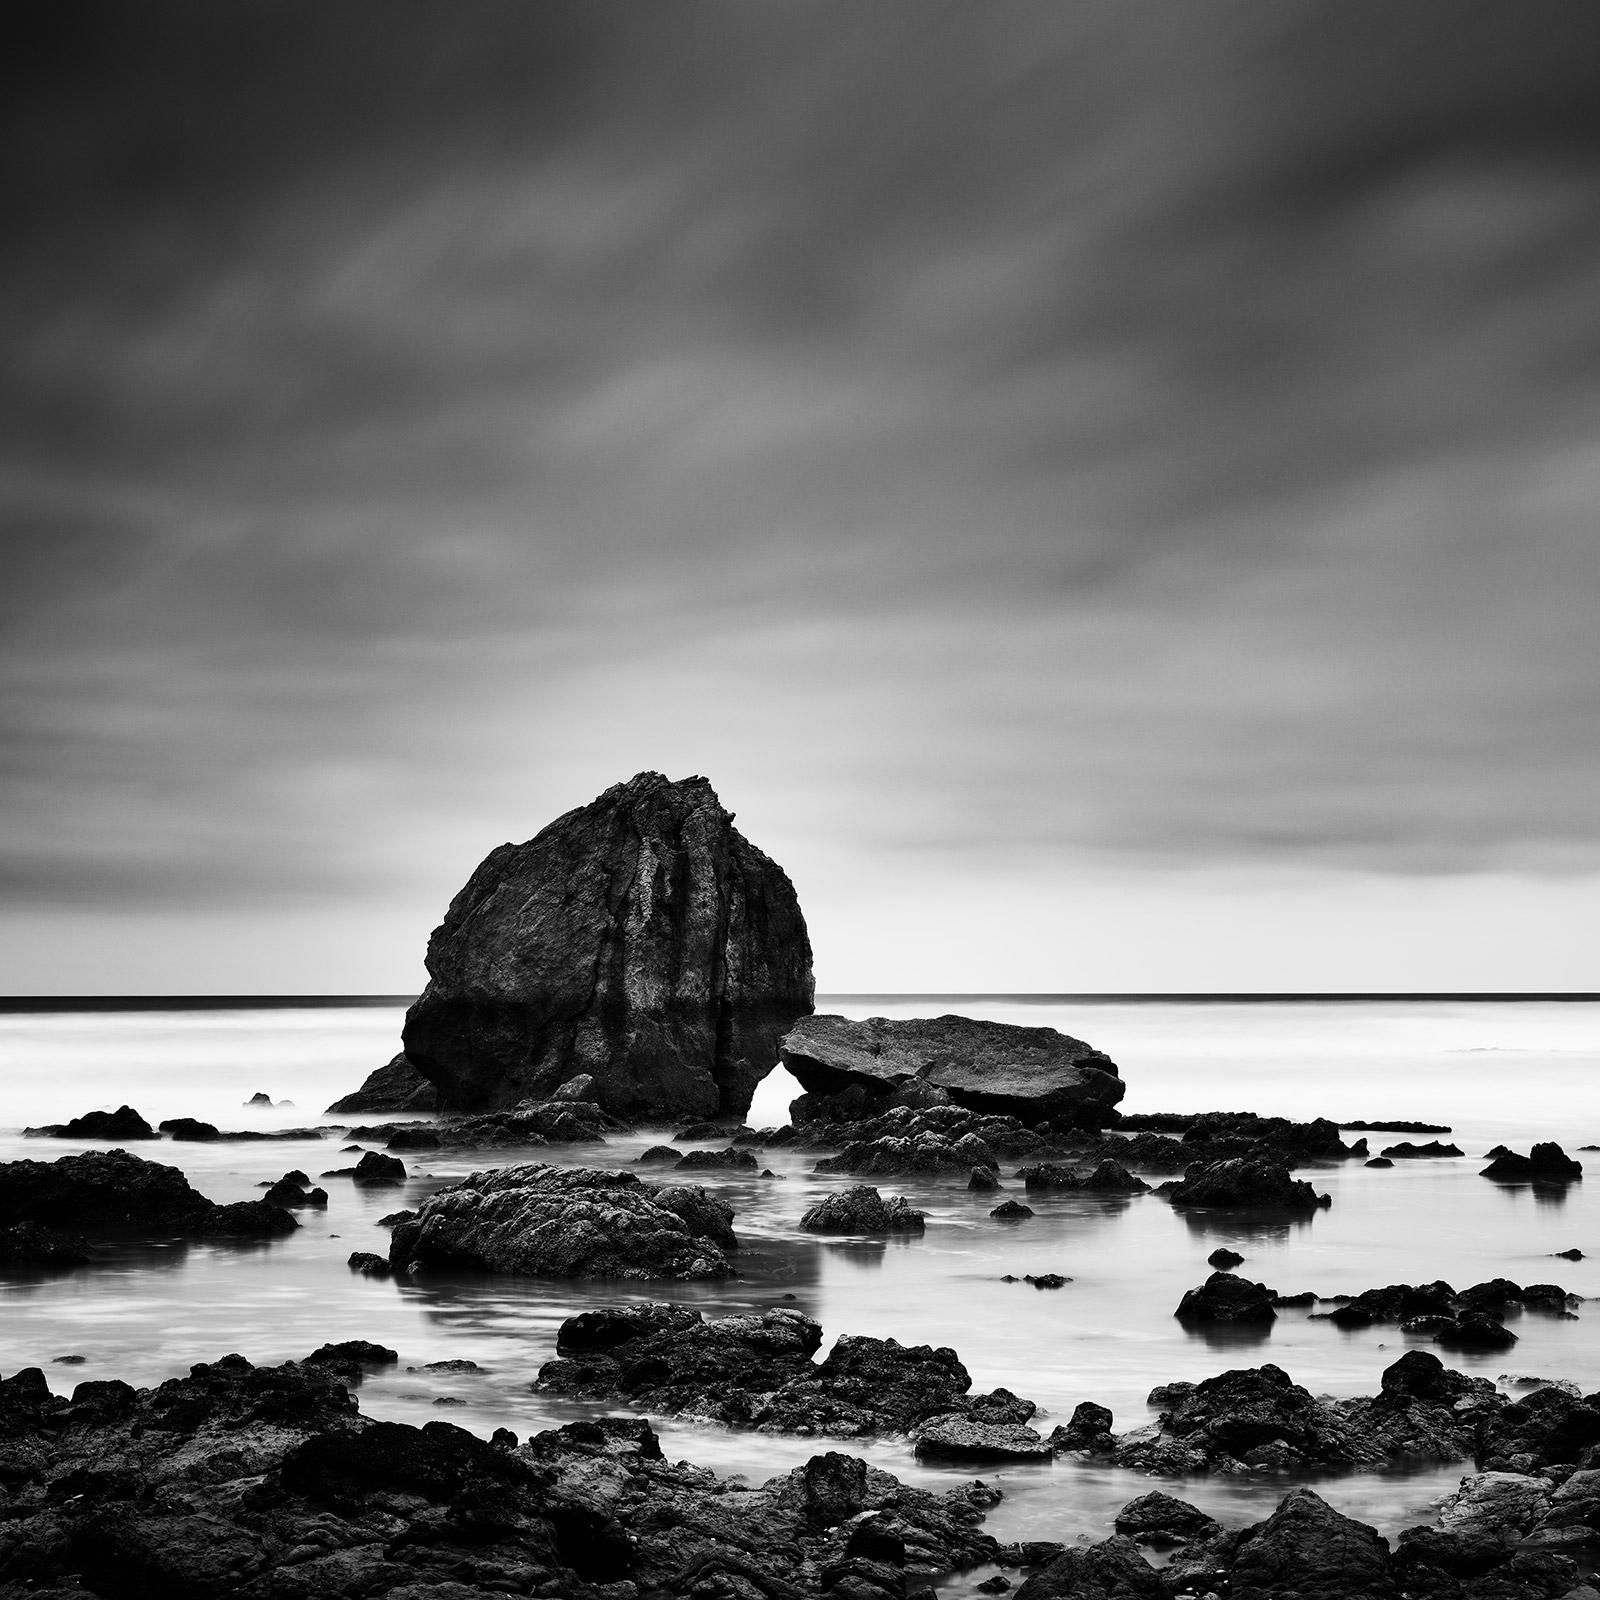 Gerald Berghammer Landscape Photograph - Beach Rock, giant stones, shoreline, France, black and white, landscape, photo